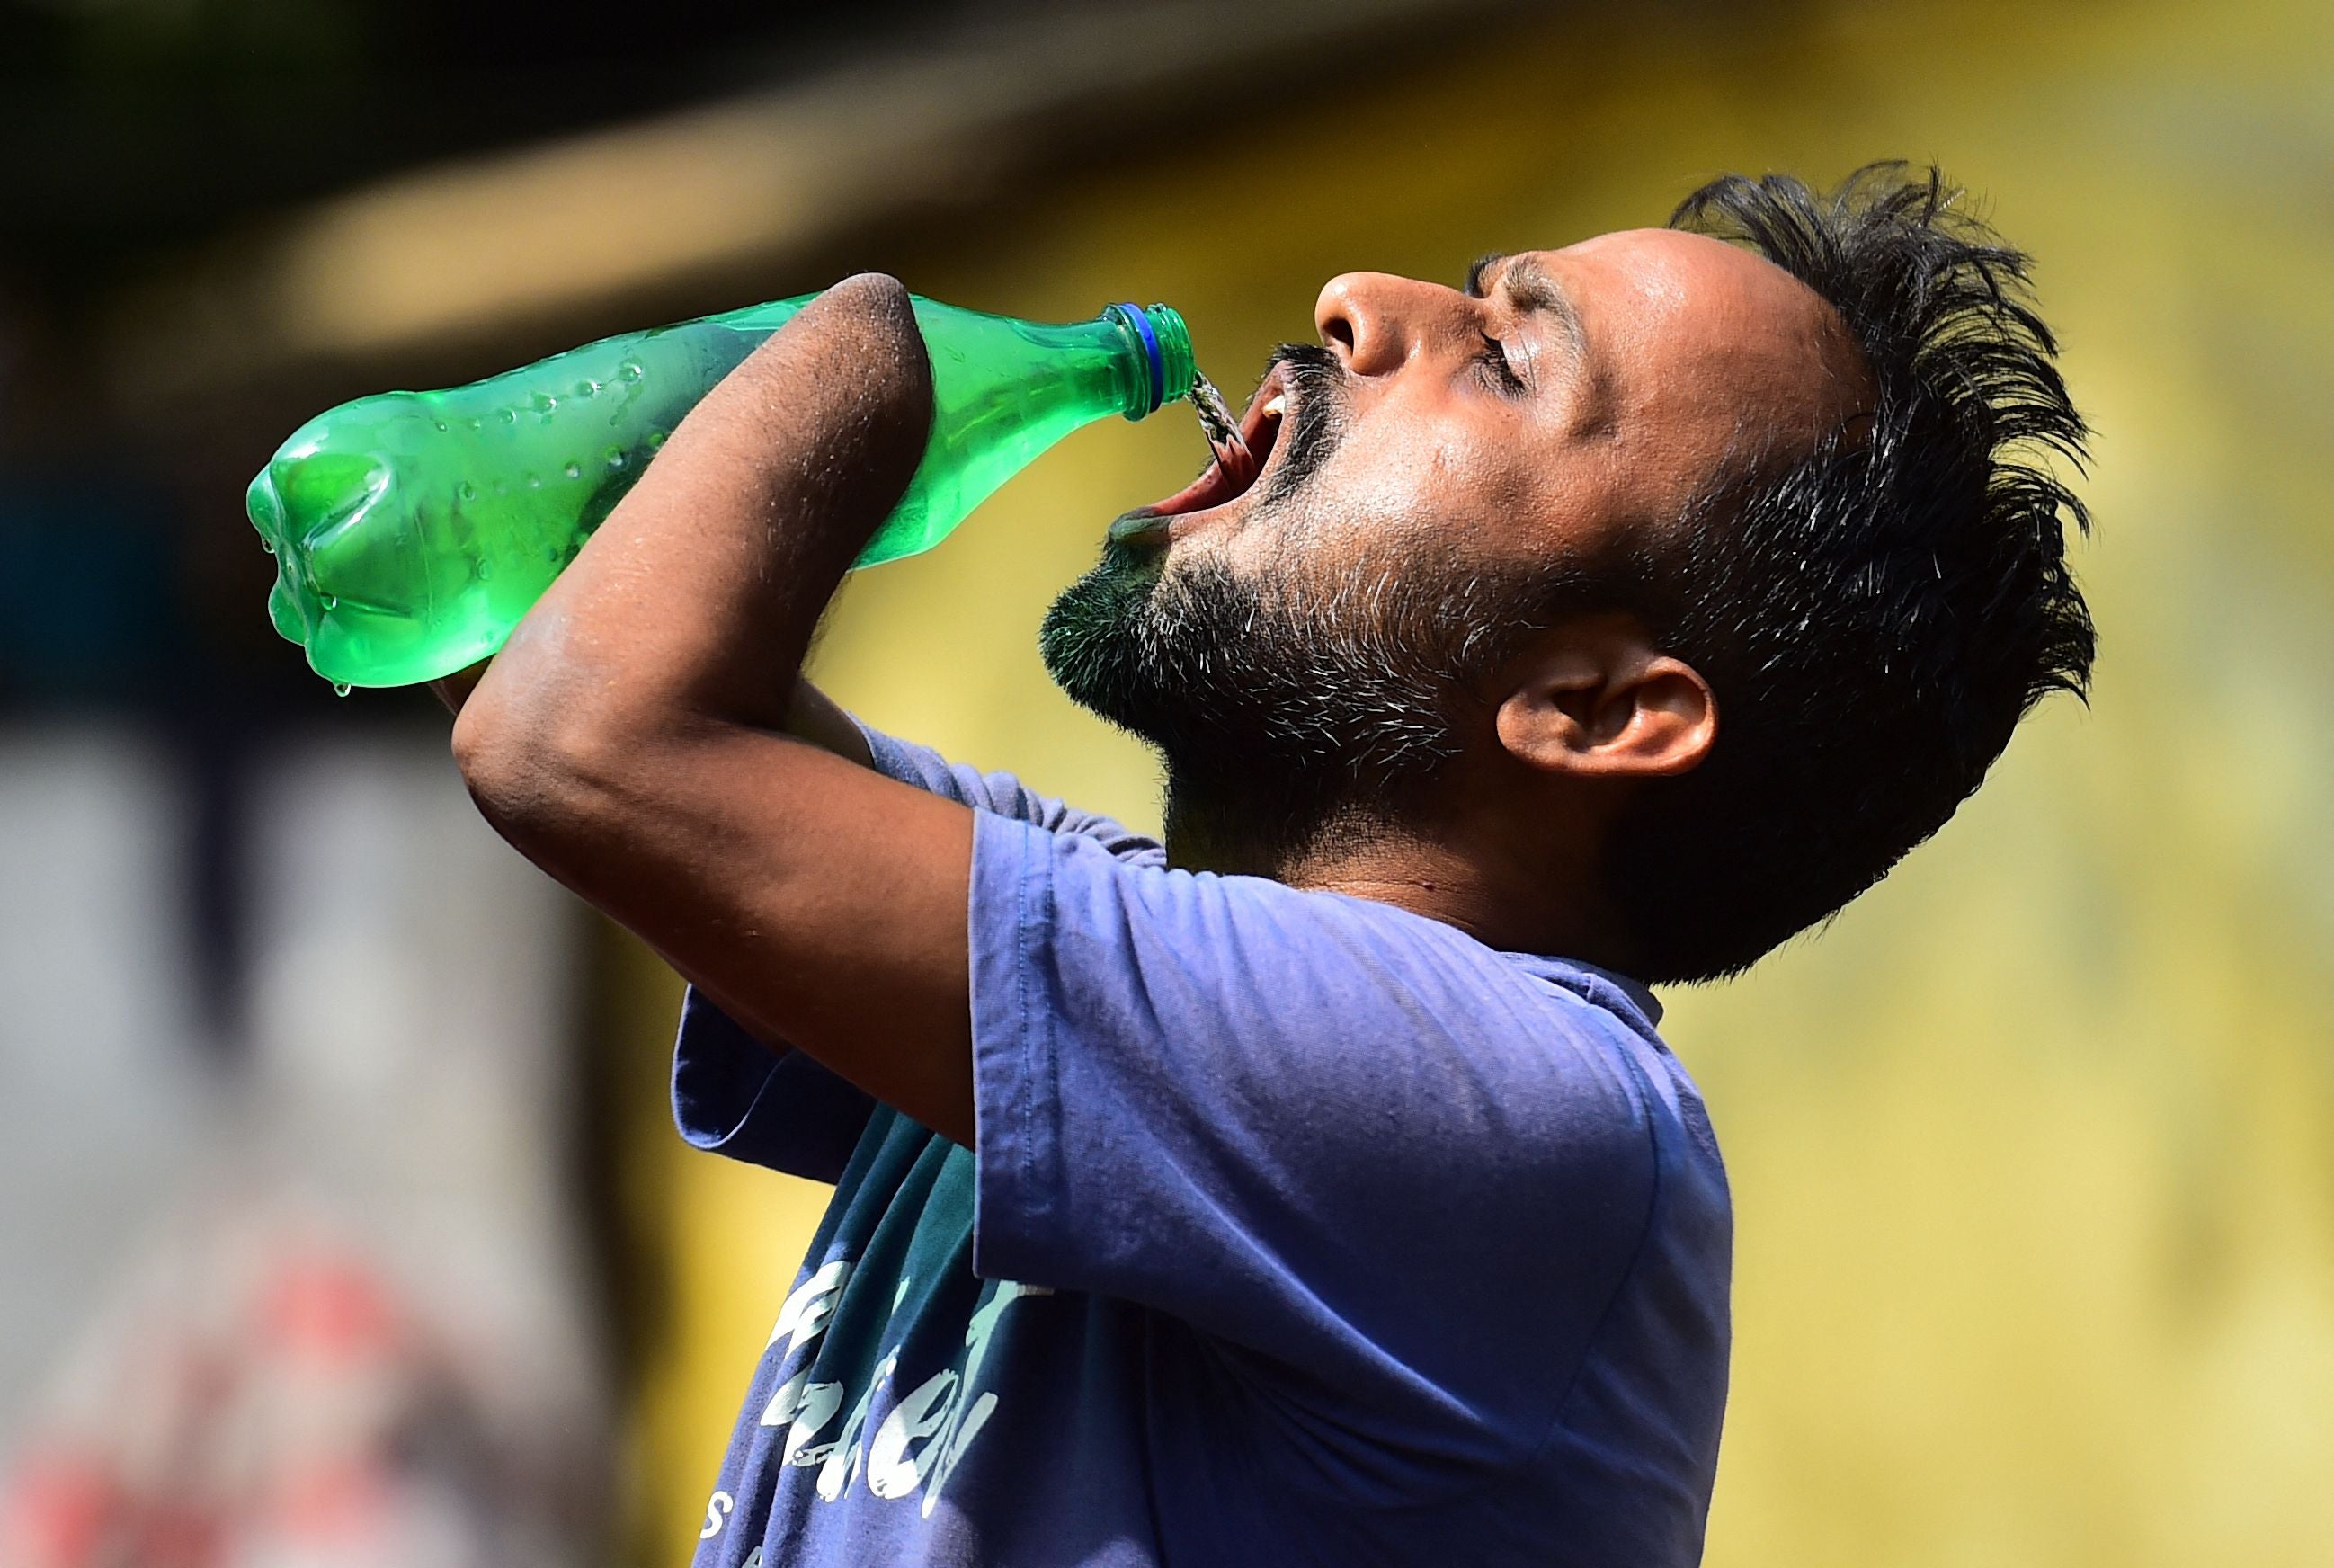 A man drinks water from a bottle in Allahabad, Uttar Pradesh